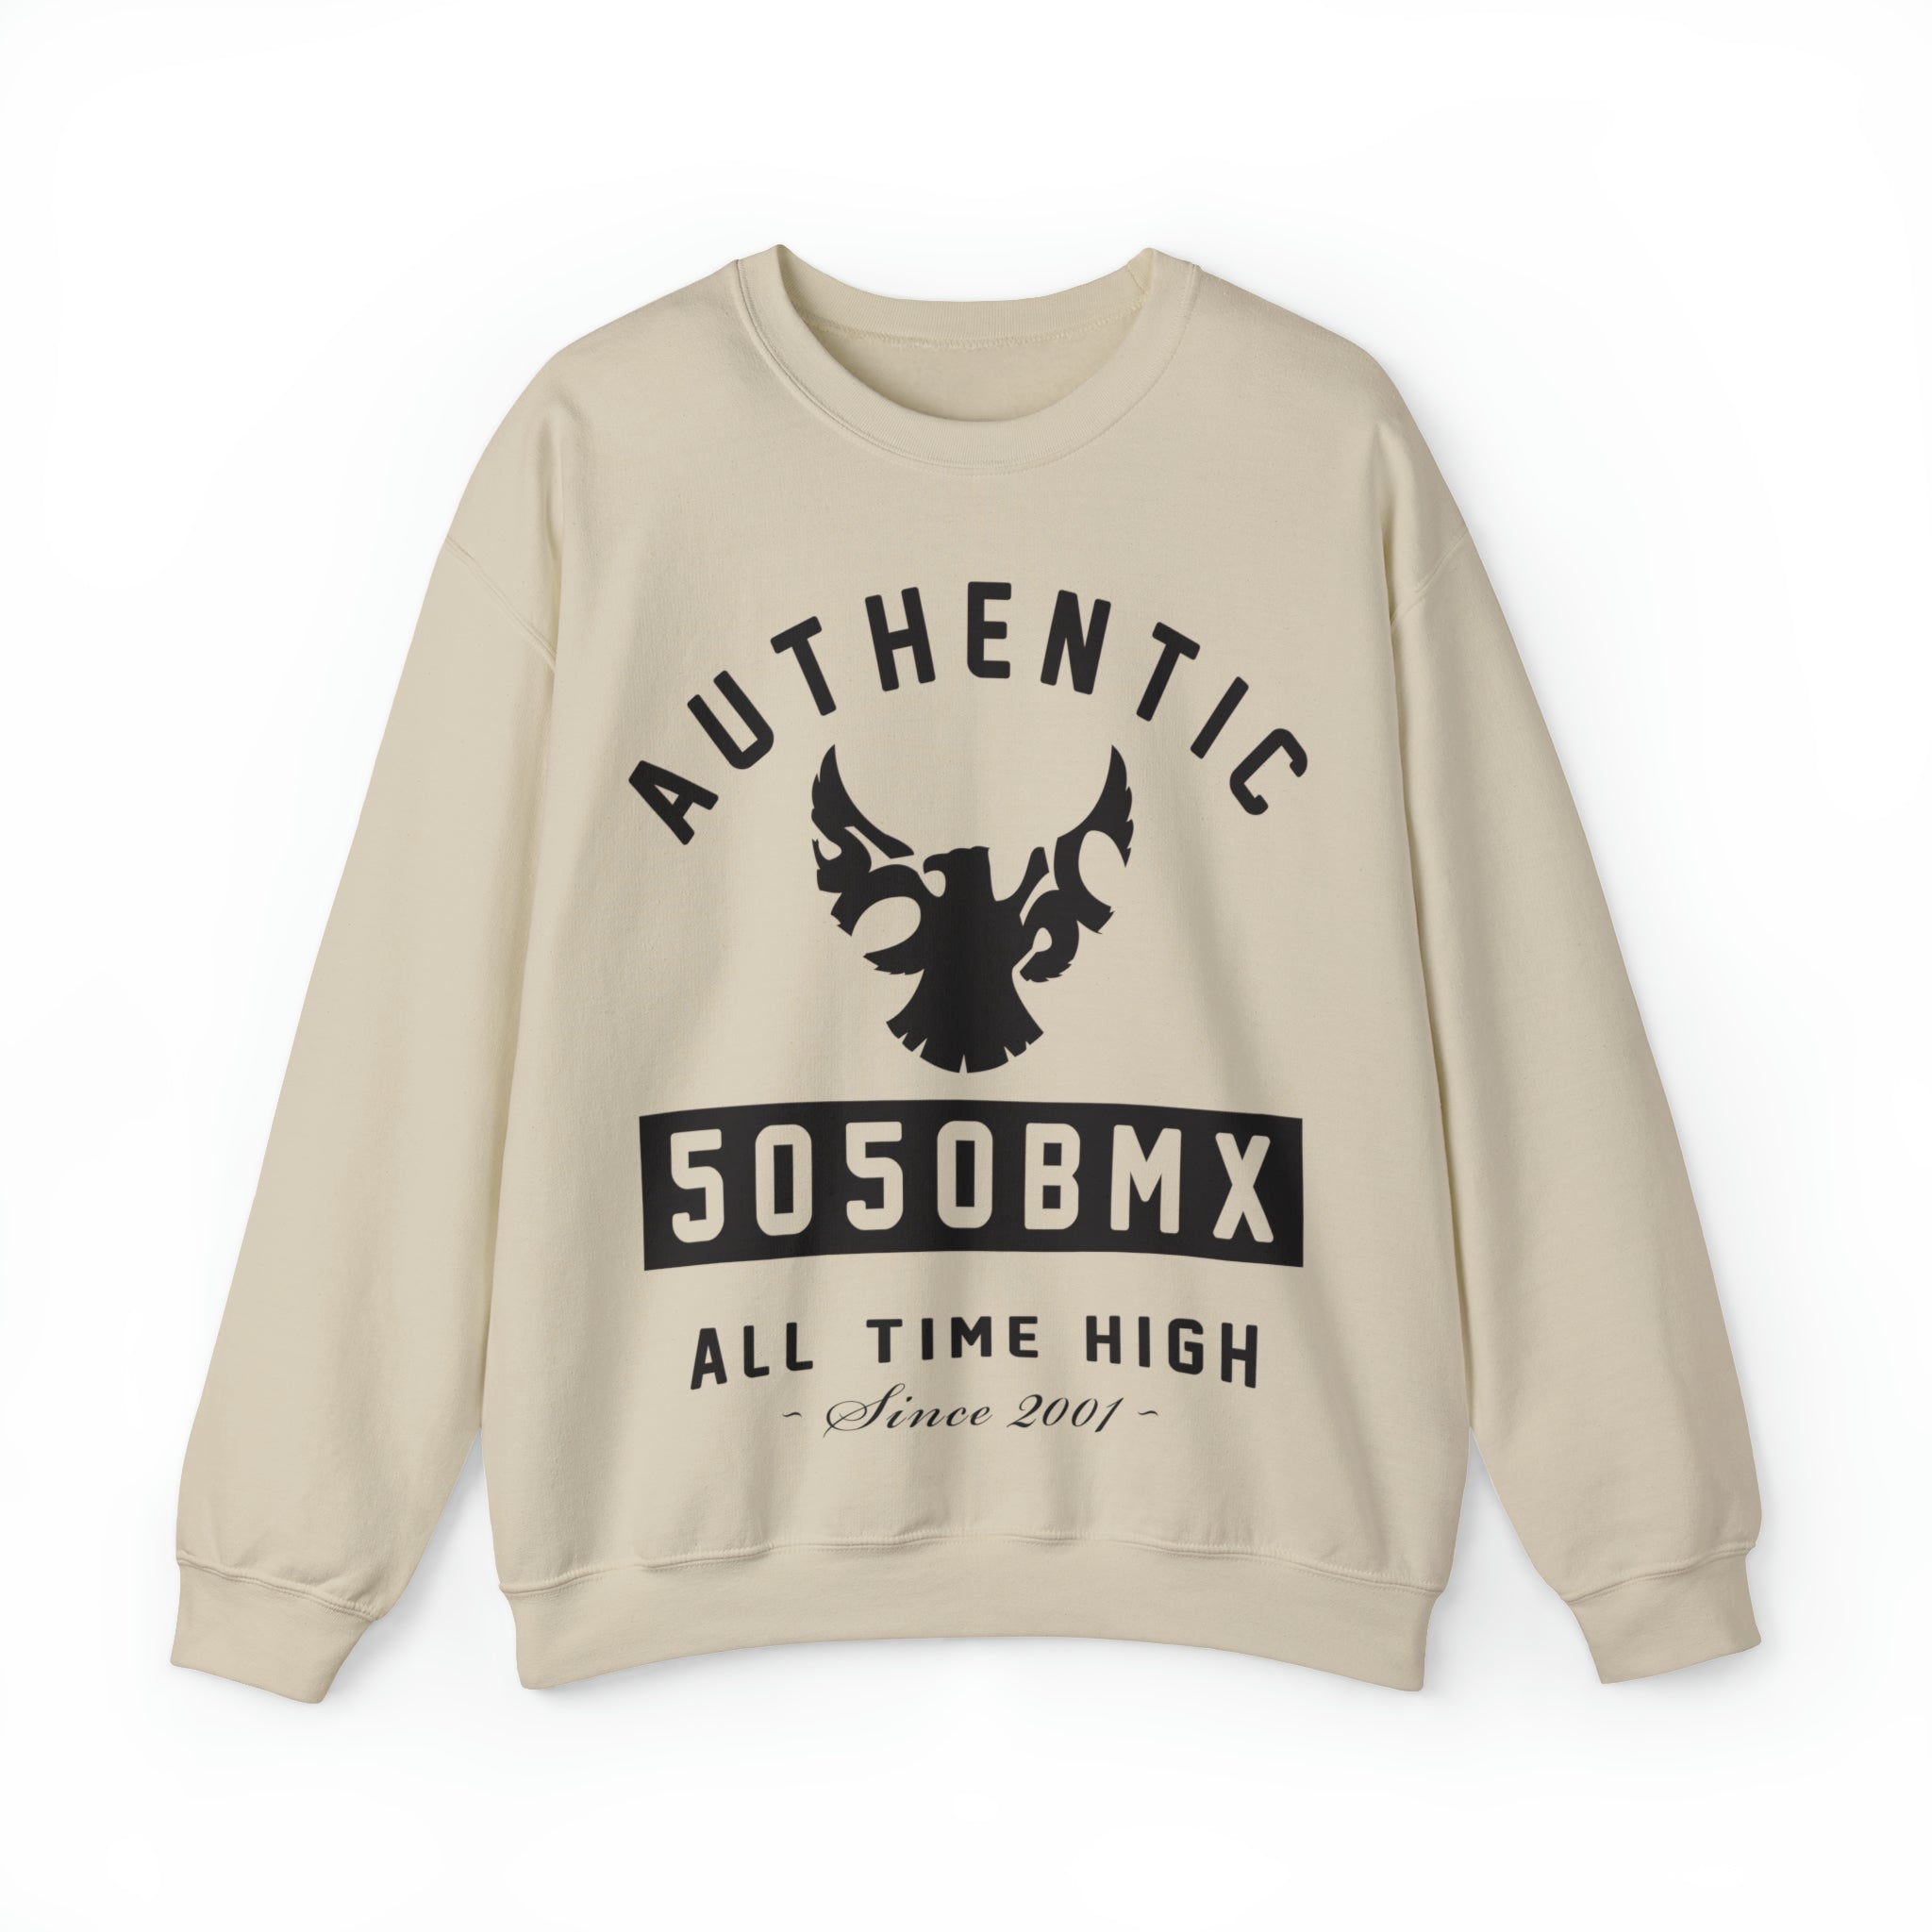 5050bmx All Time High Sweatshirt (Black)